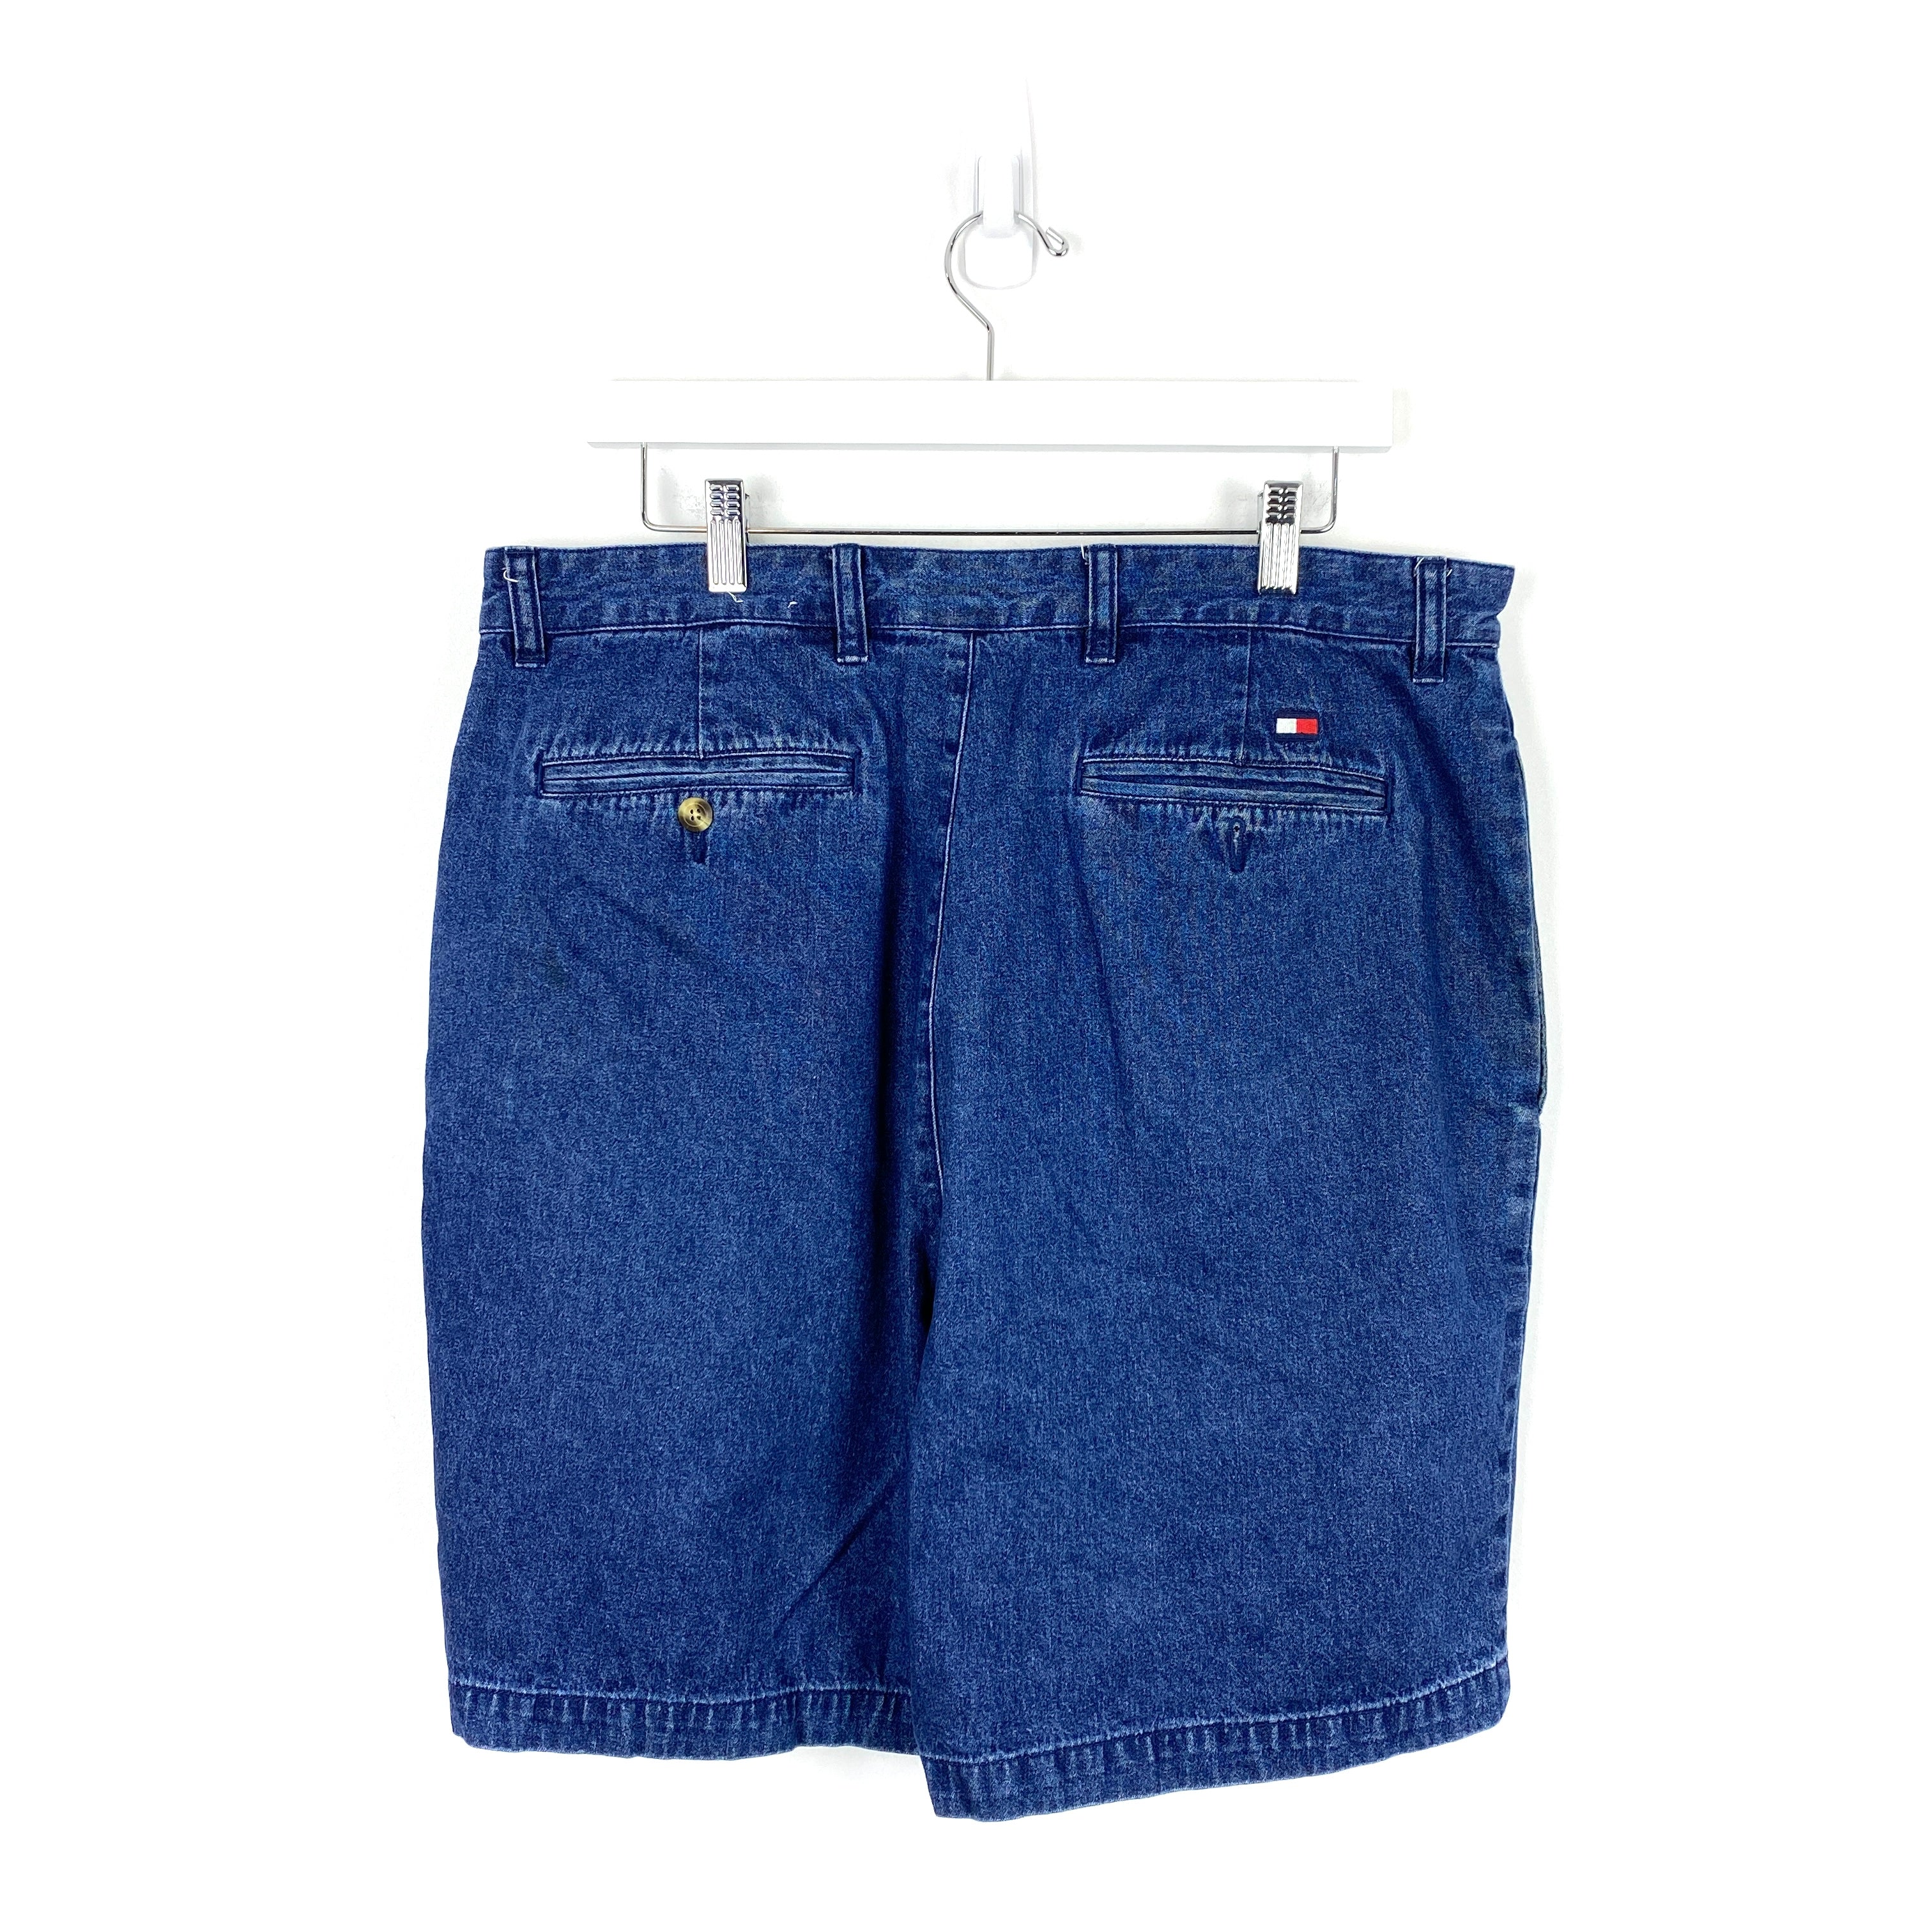 Vintage Tommy Hilfiger Chino Shorts - Men's 36